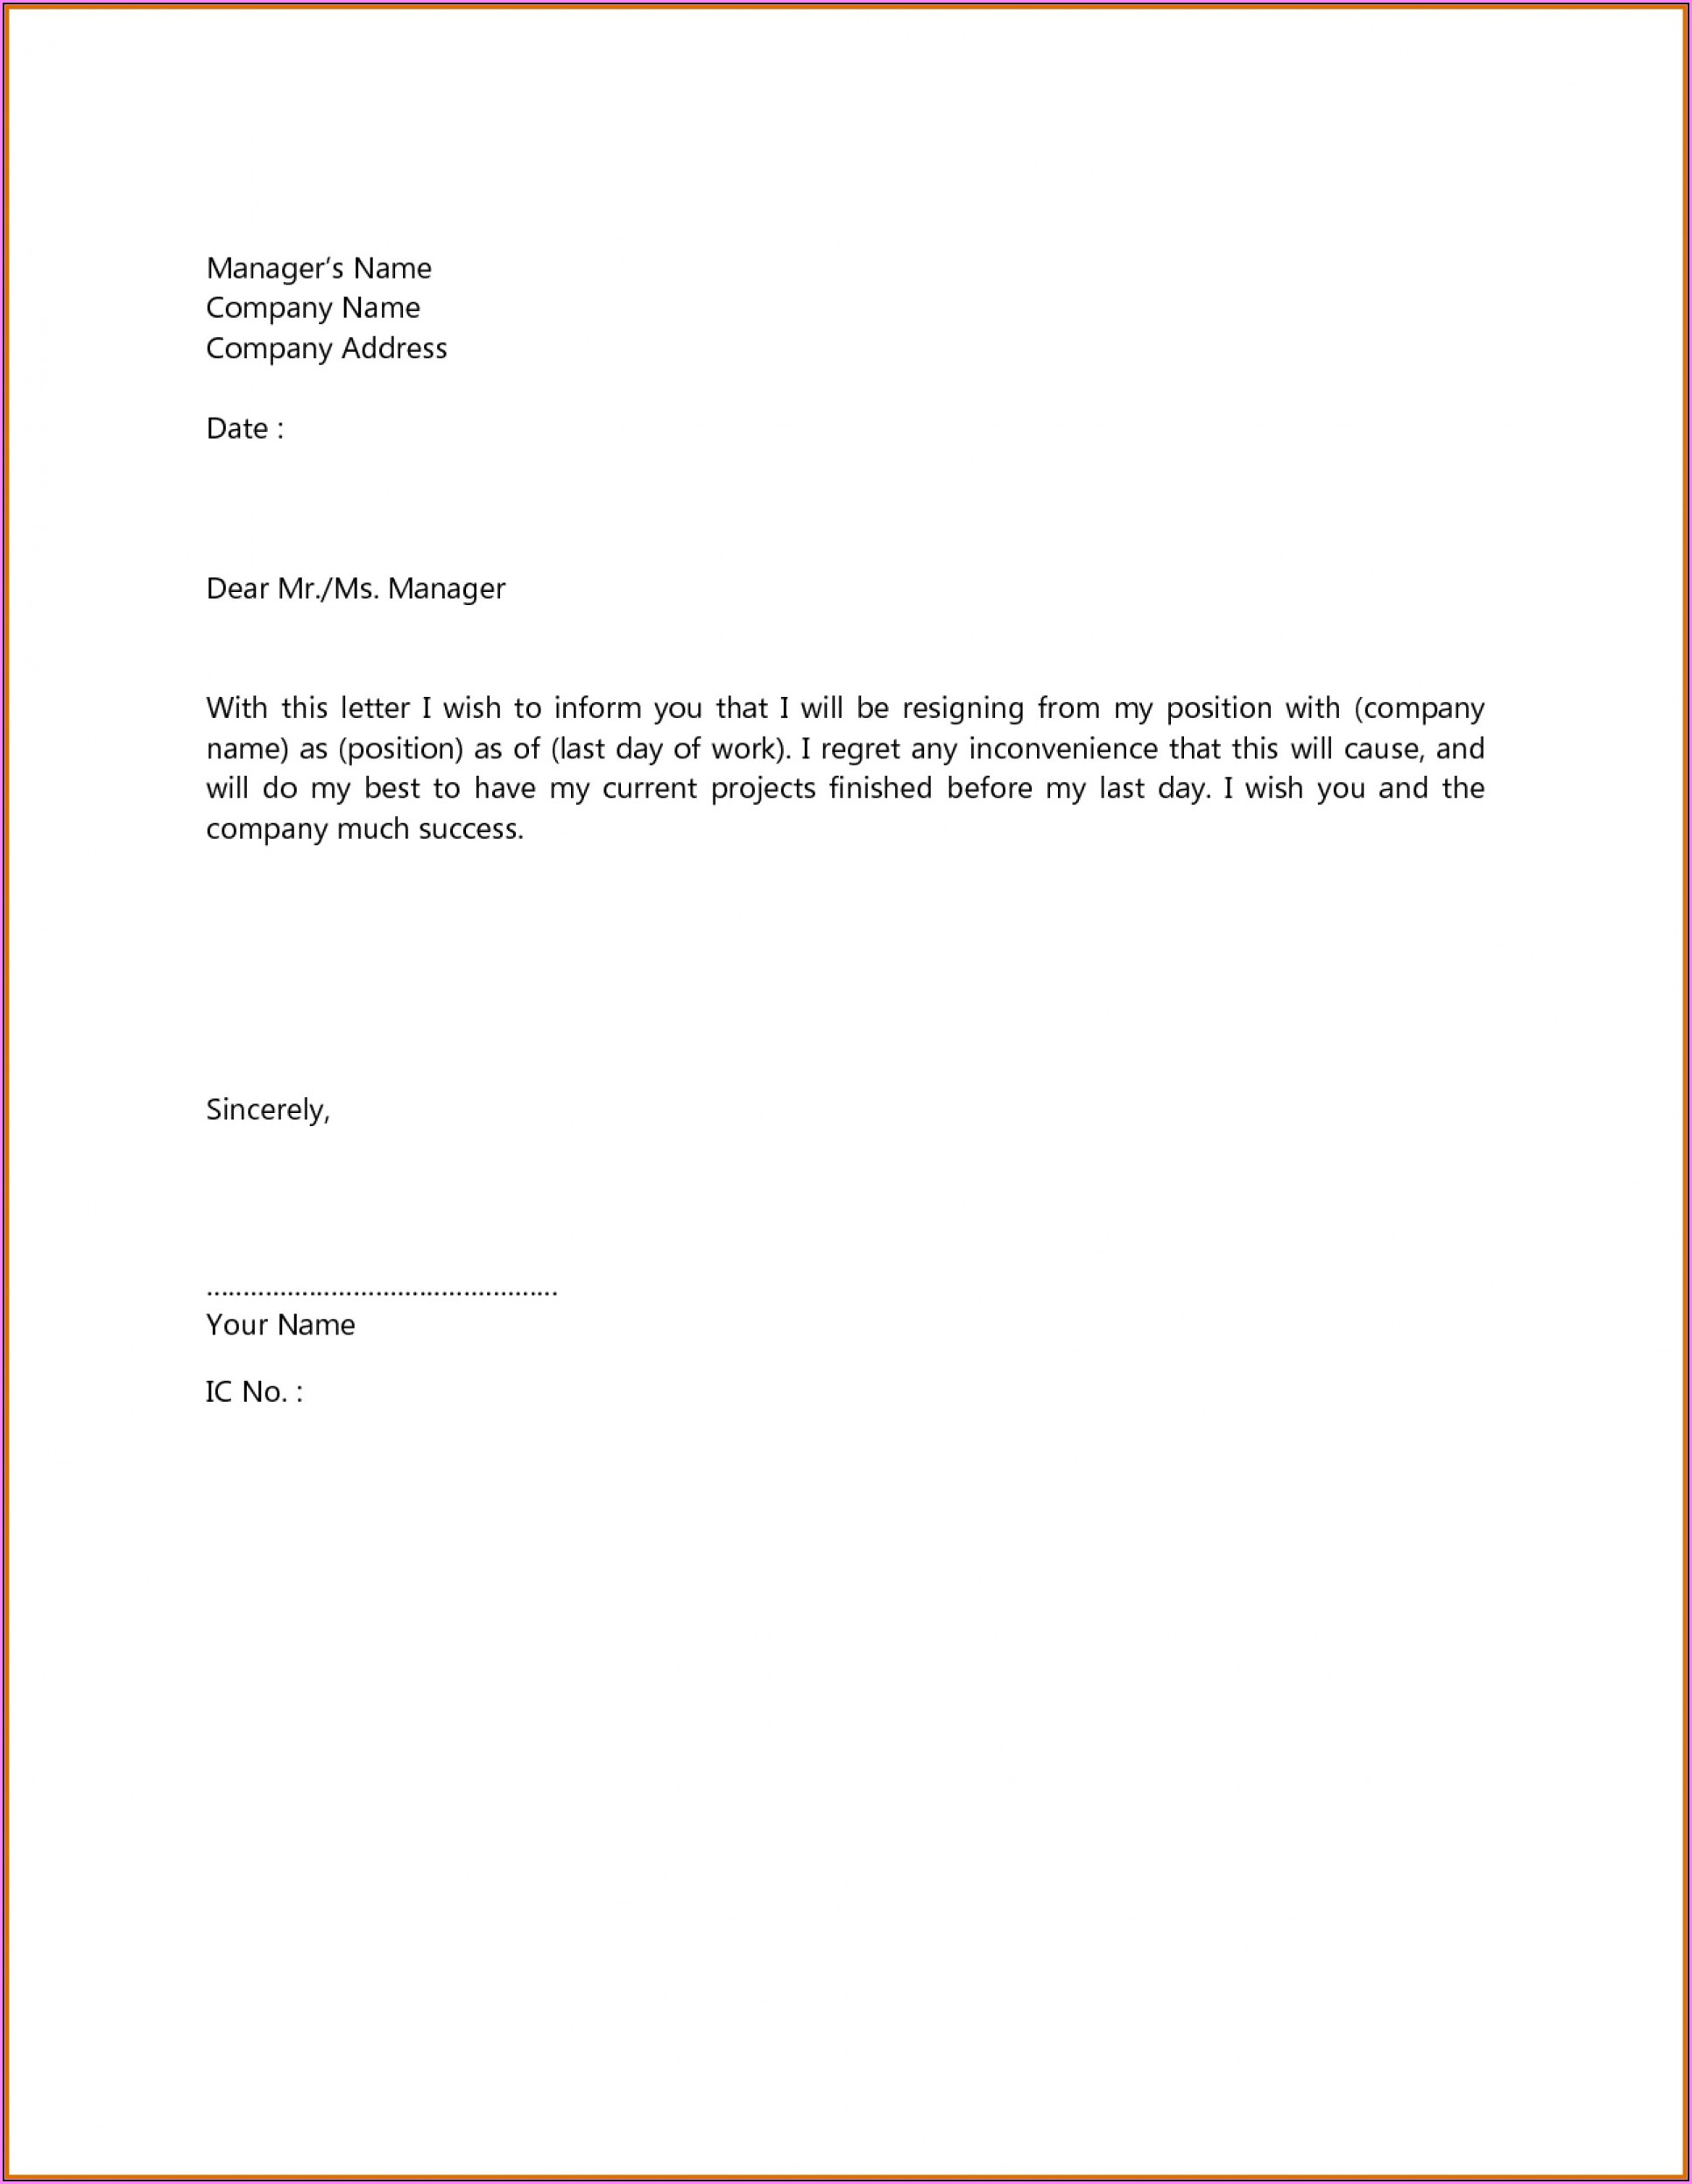 Free Resignation Letter Template Australia